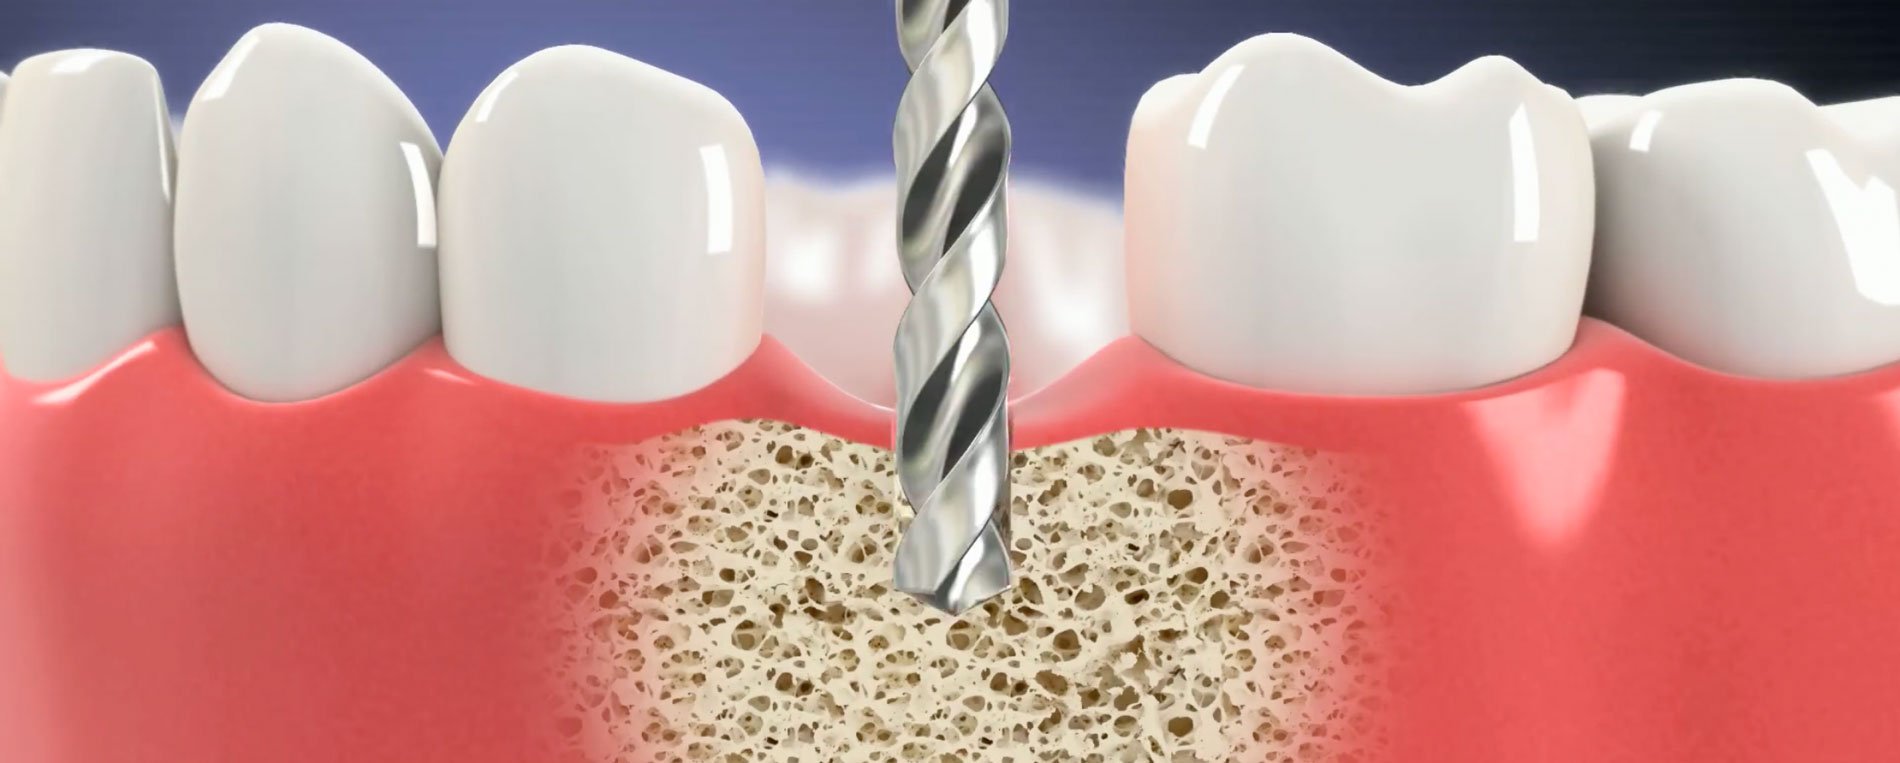 implant dentaire video jildent clinique